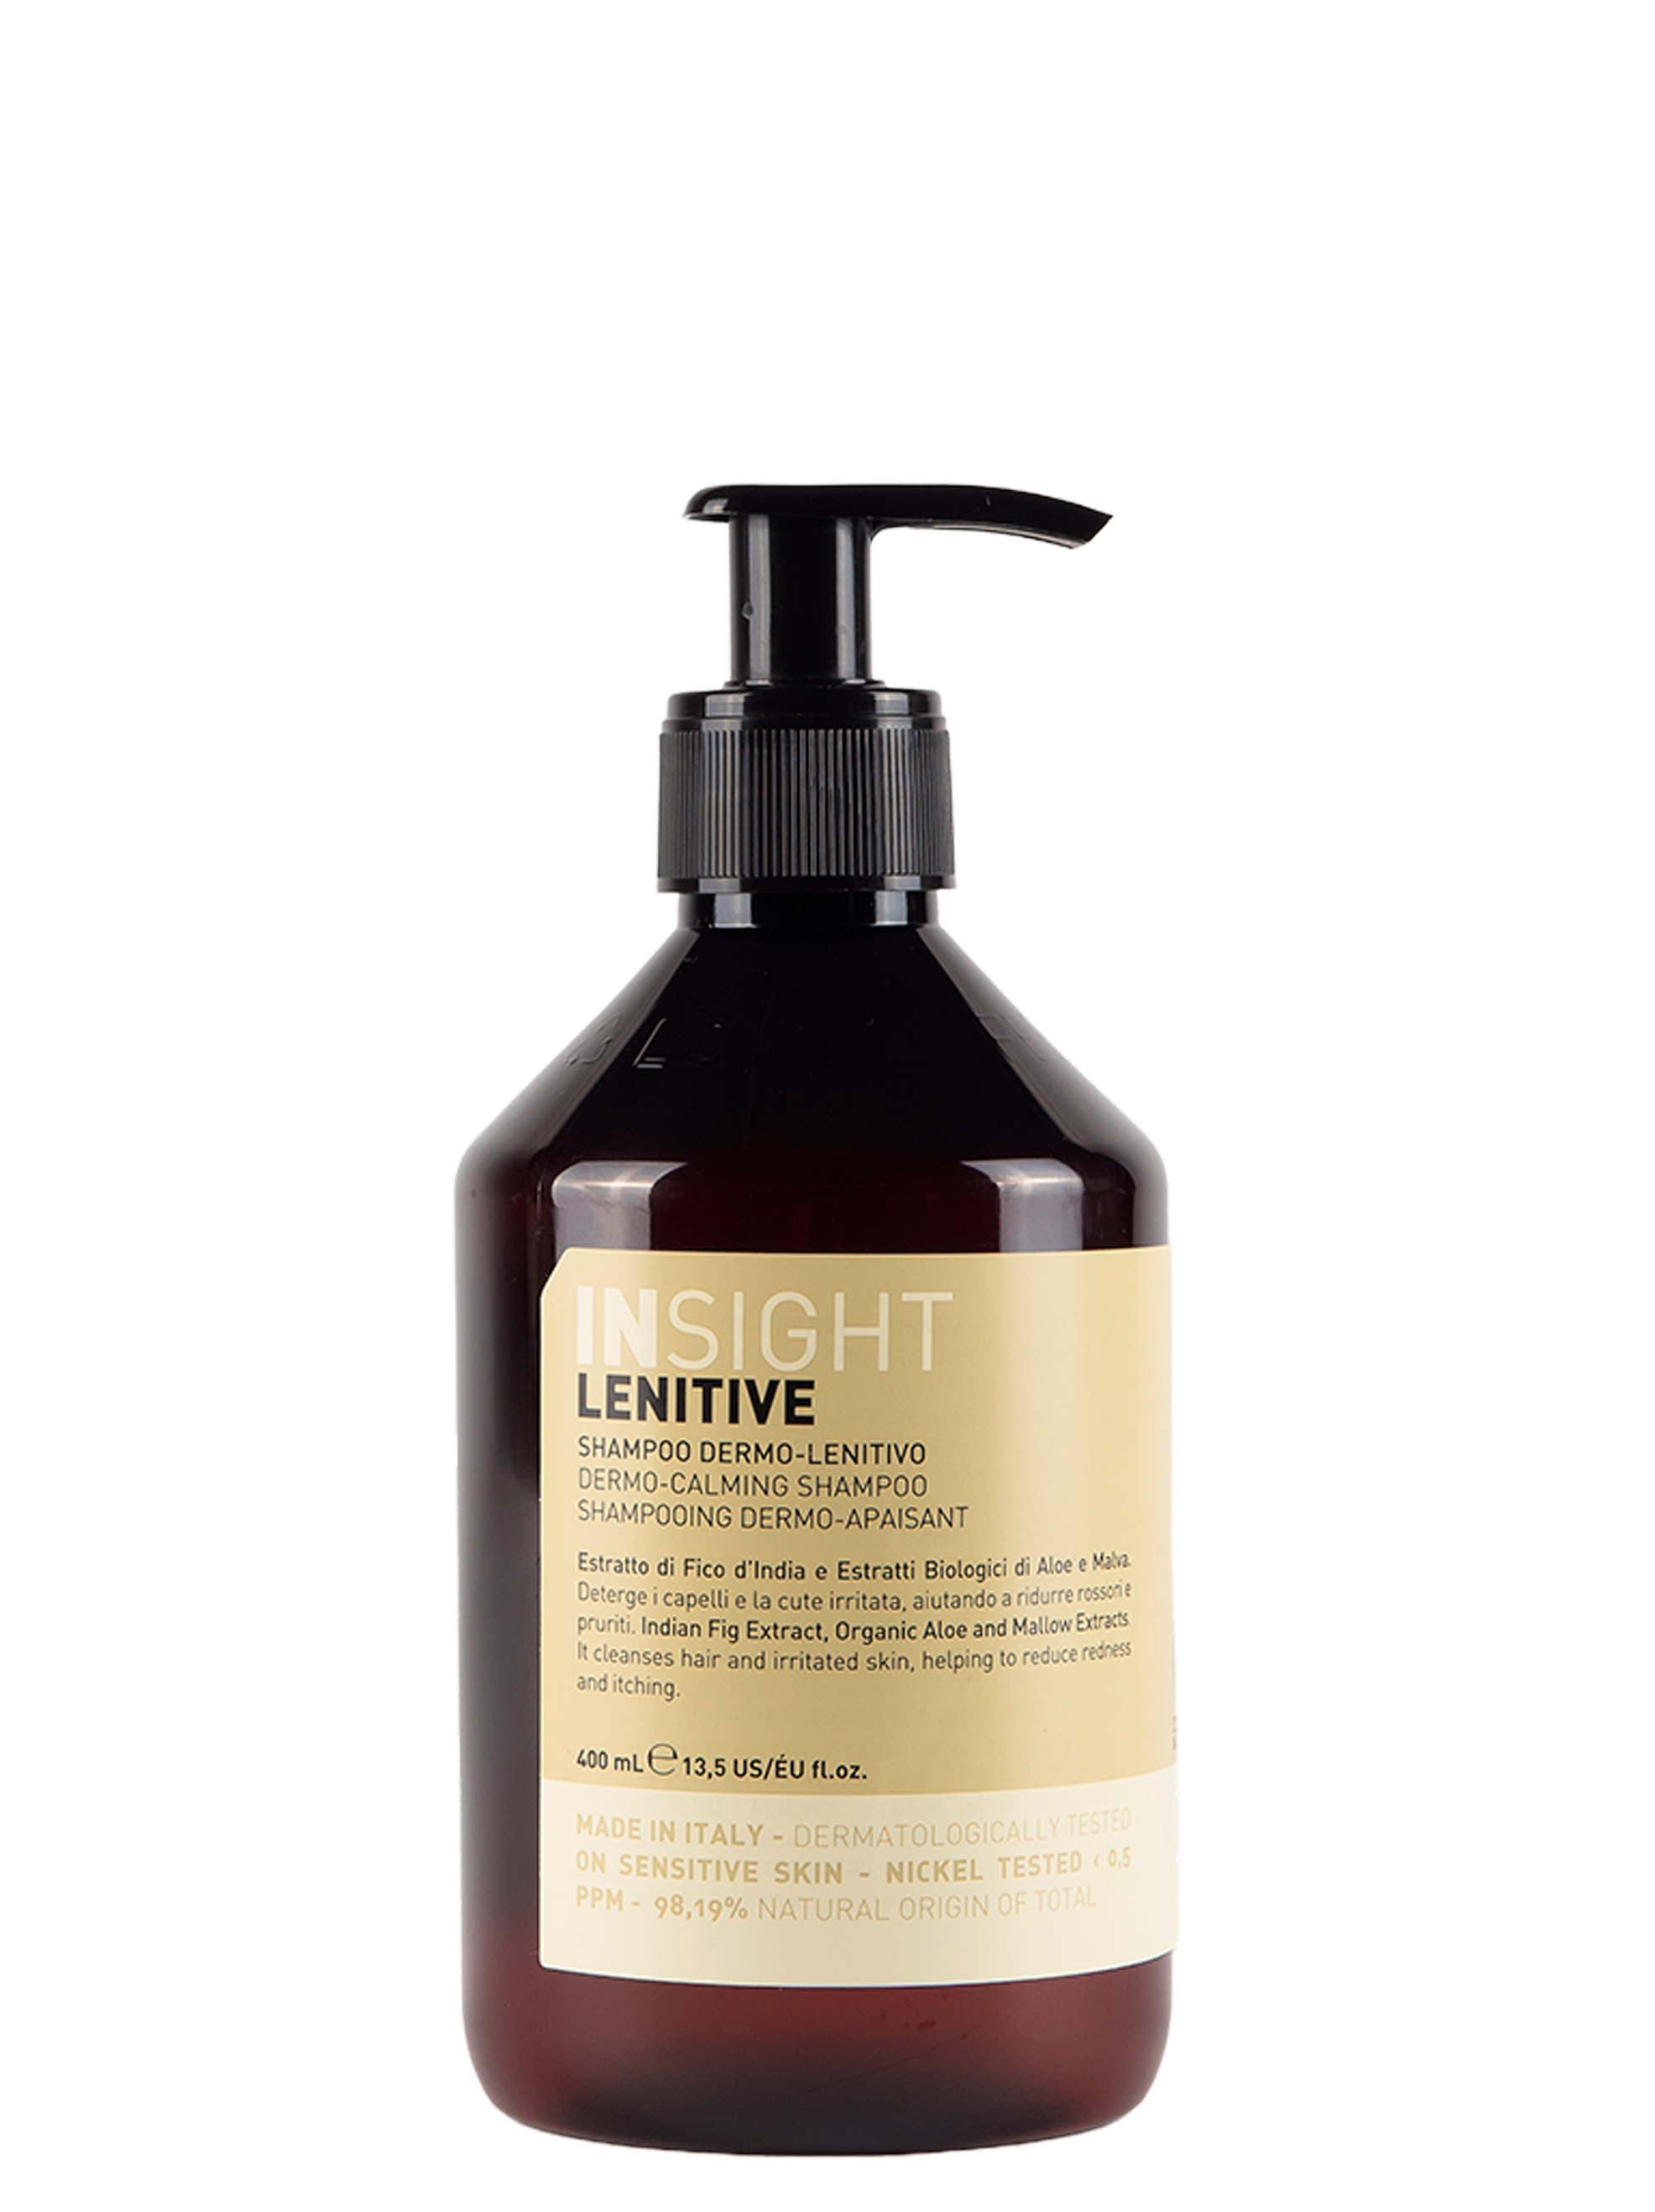 INSIGHT-Lenitive-Dermo-Calming-Shampoo-400ml